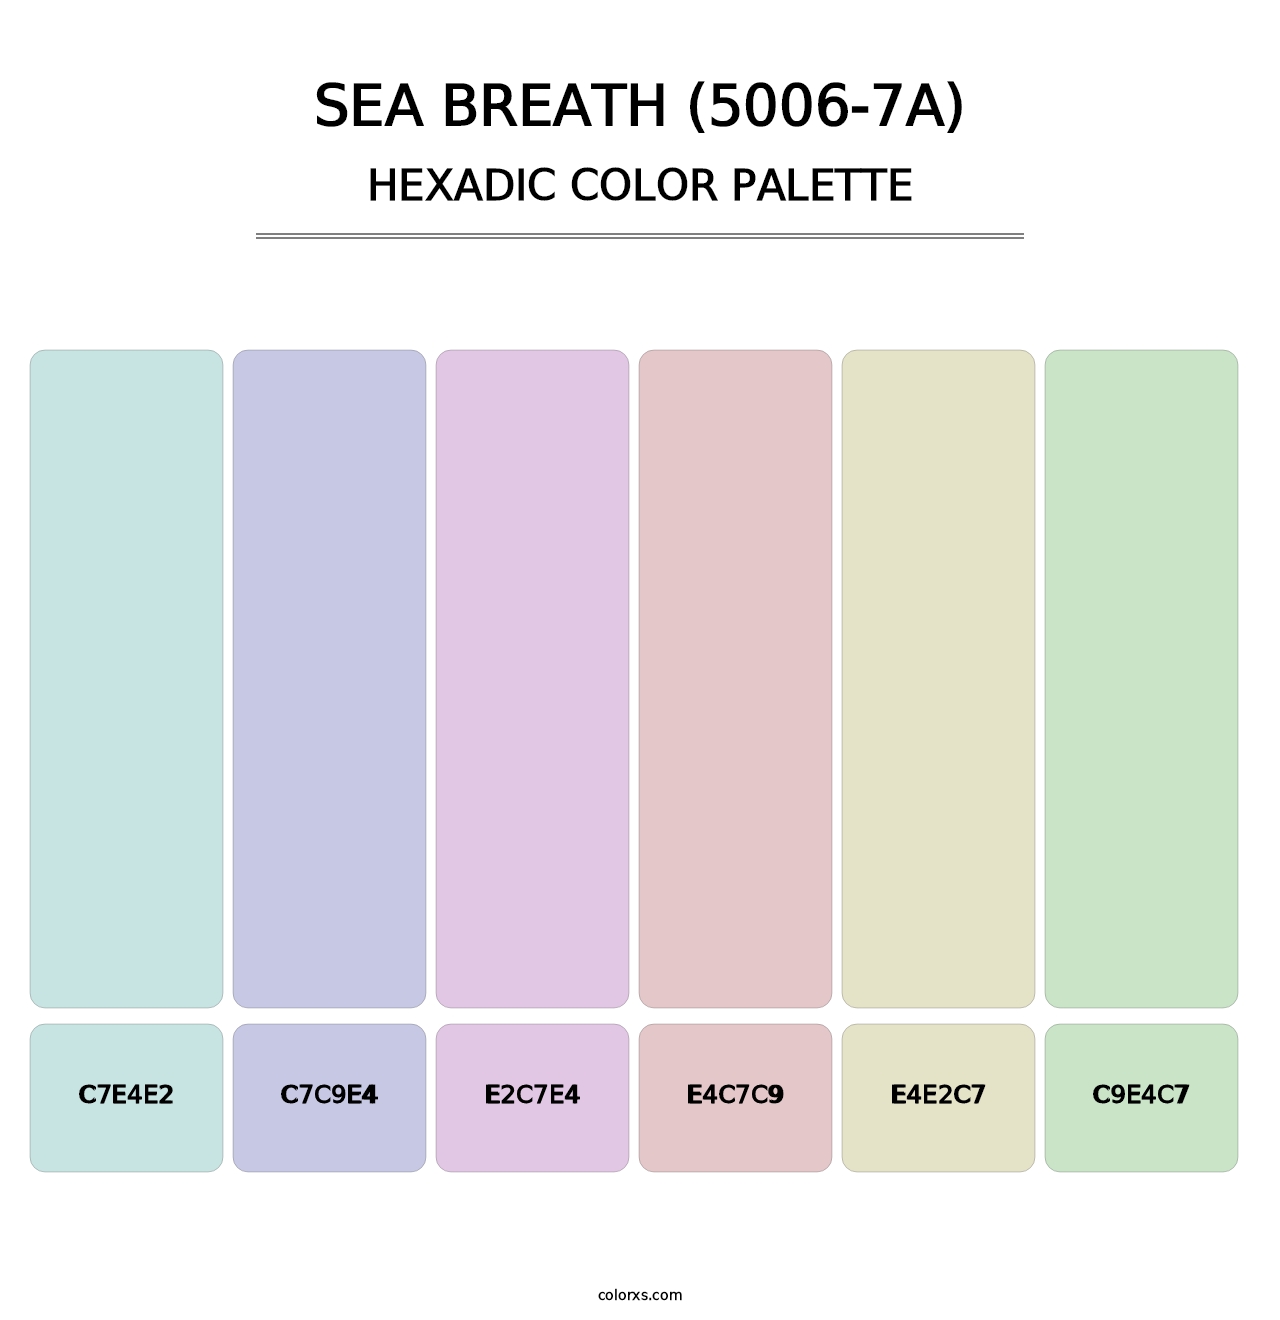 Sea Breath (5006-7A) - Hexadic Color Palette